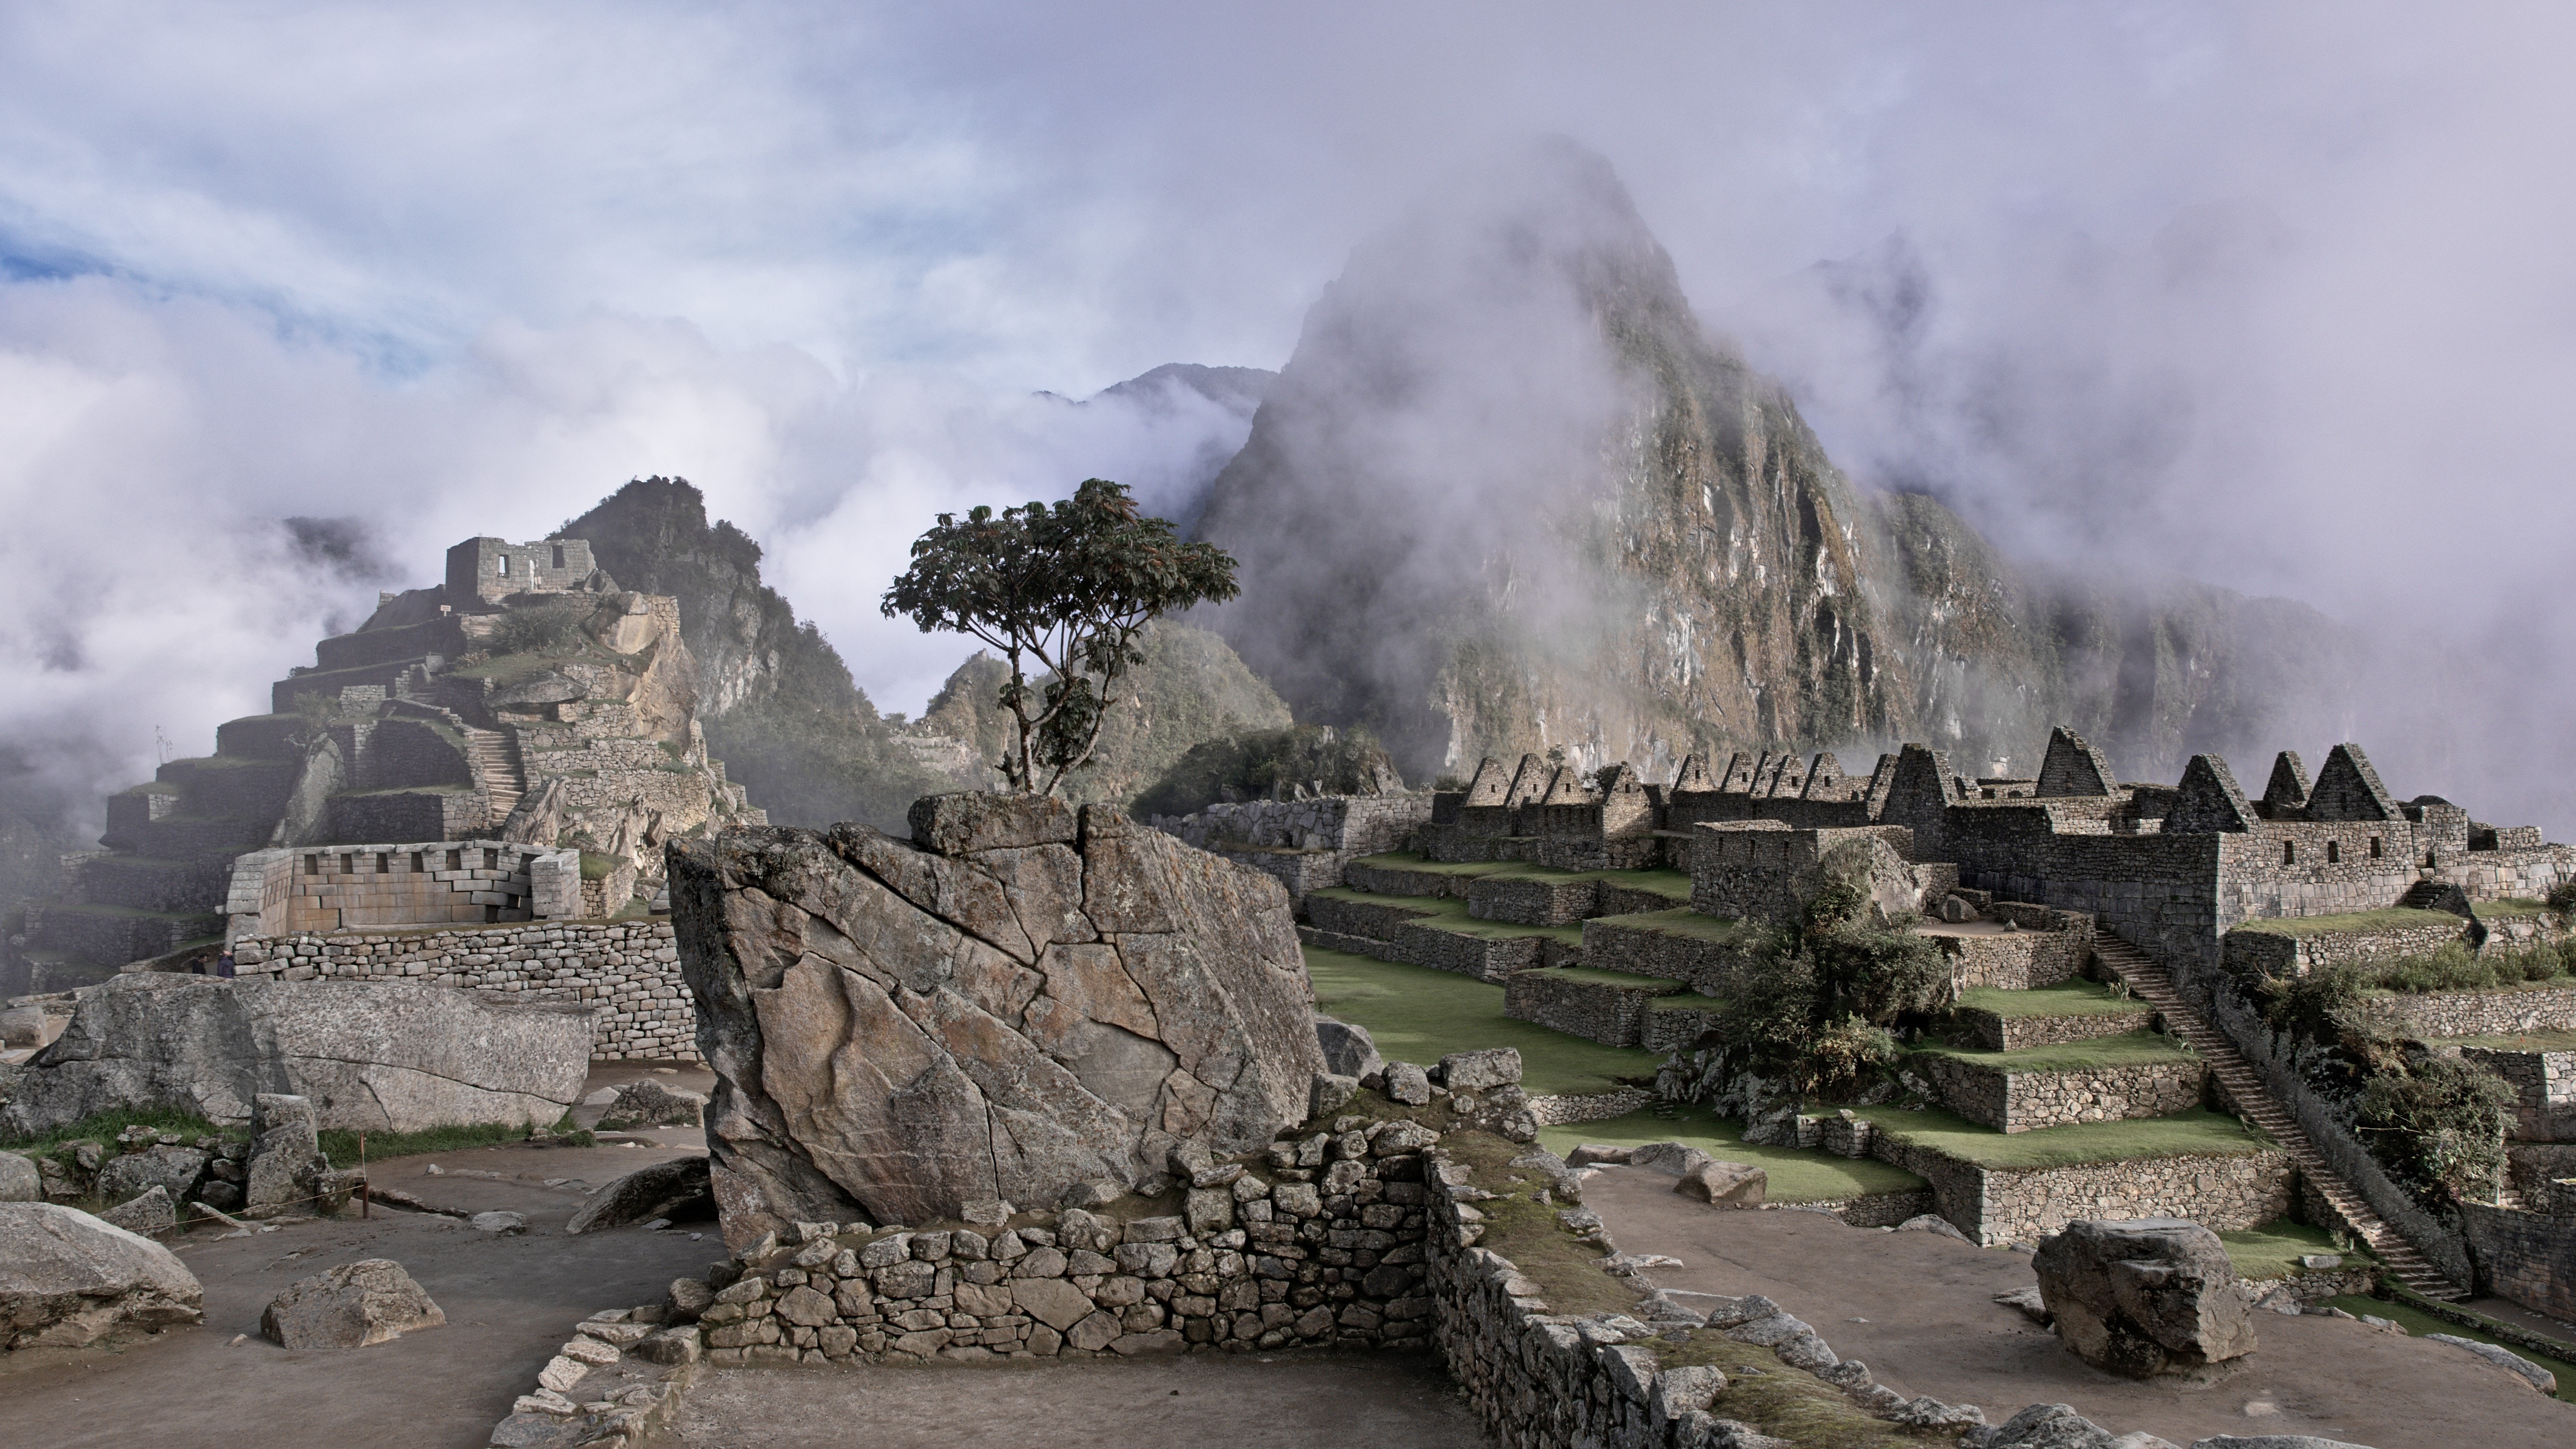 Machu Picchu Archaeological Park
Photo by Tomas Sobek